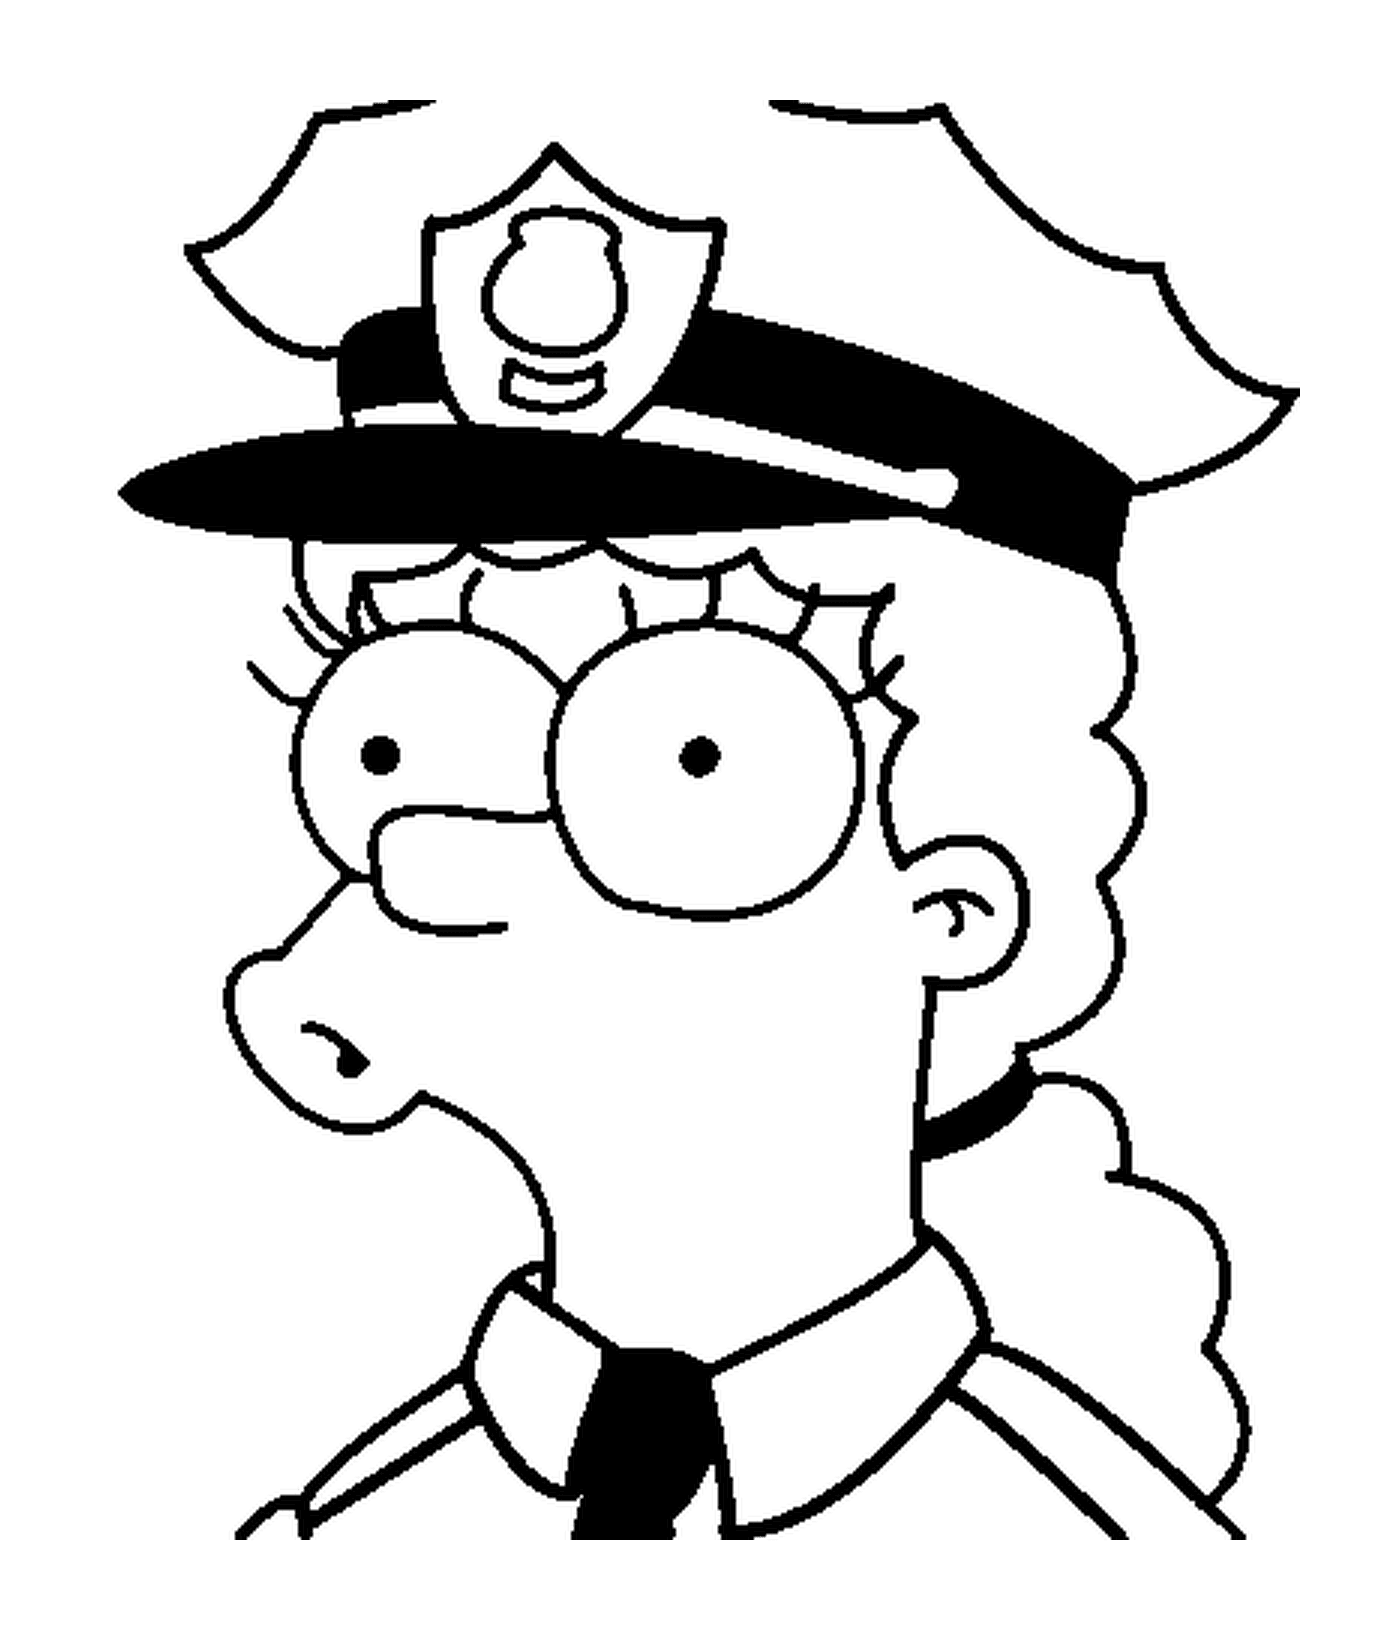  Police Margin 